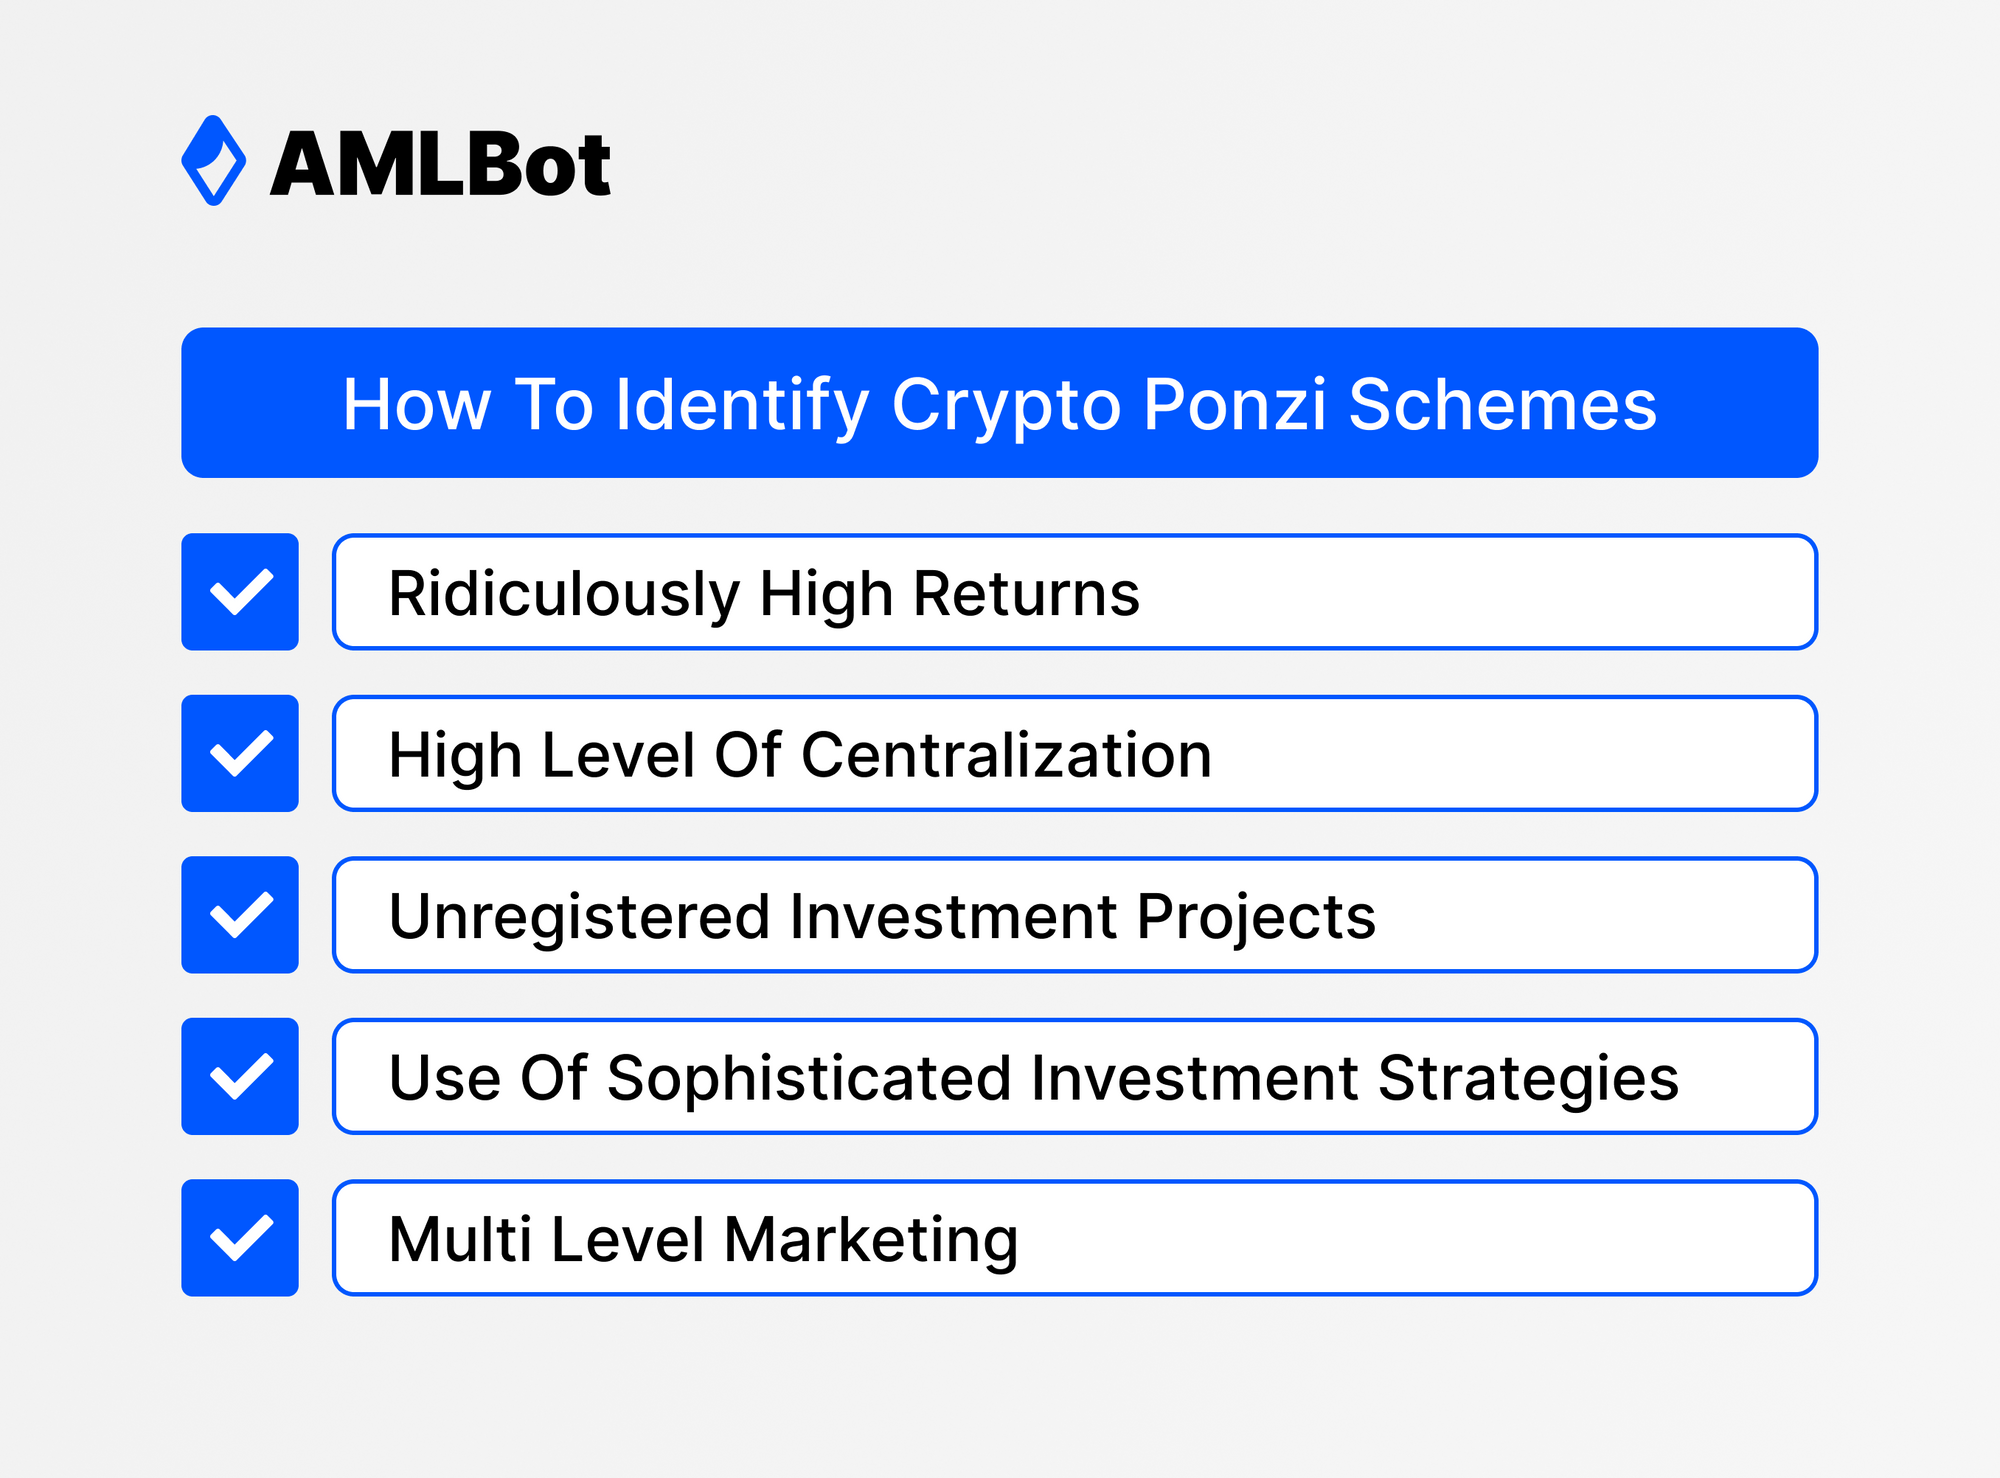 How to Identify Crypto Ponzi Schemes